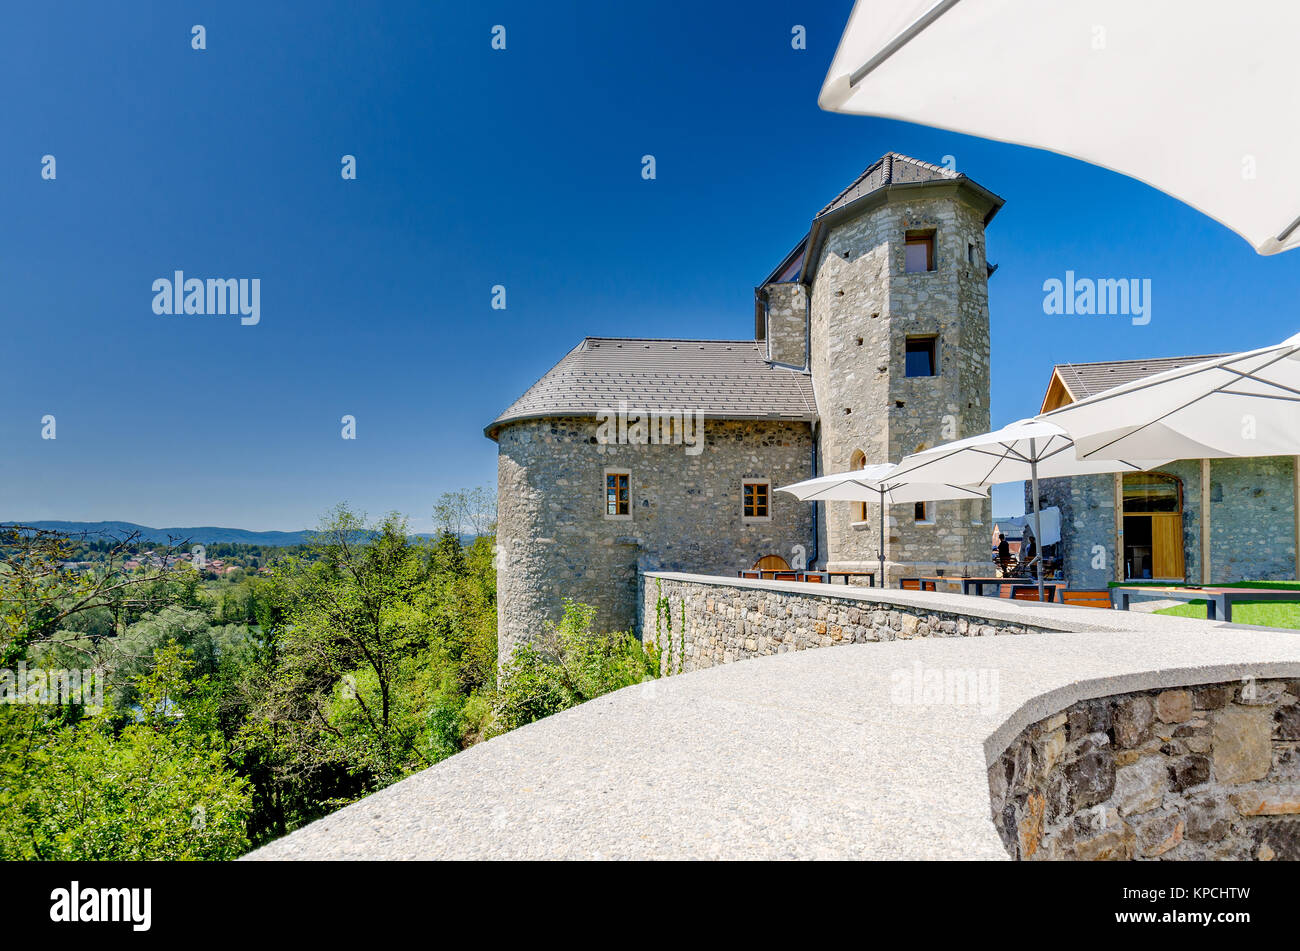 Rekonstruiert aus dem 13. Jahrhundert stammenden Schloss Vinica, Bela Krajina (Weiß Krain) Region in Slowenien, Europa. Stockfoto